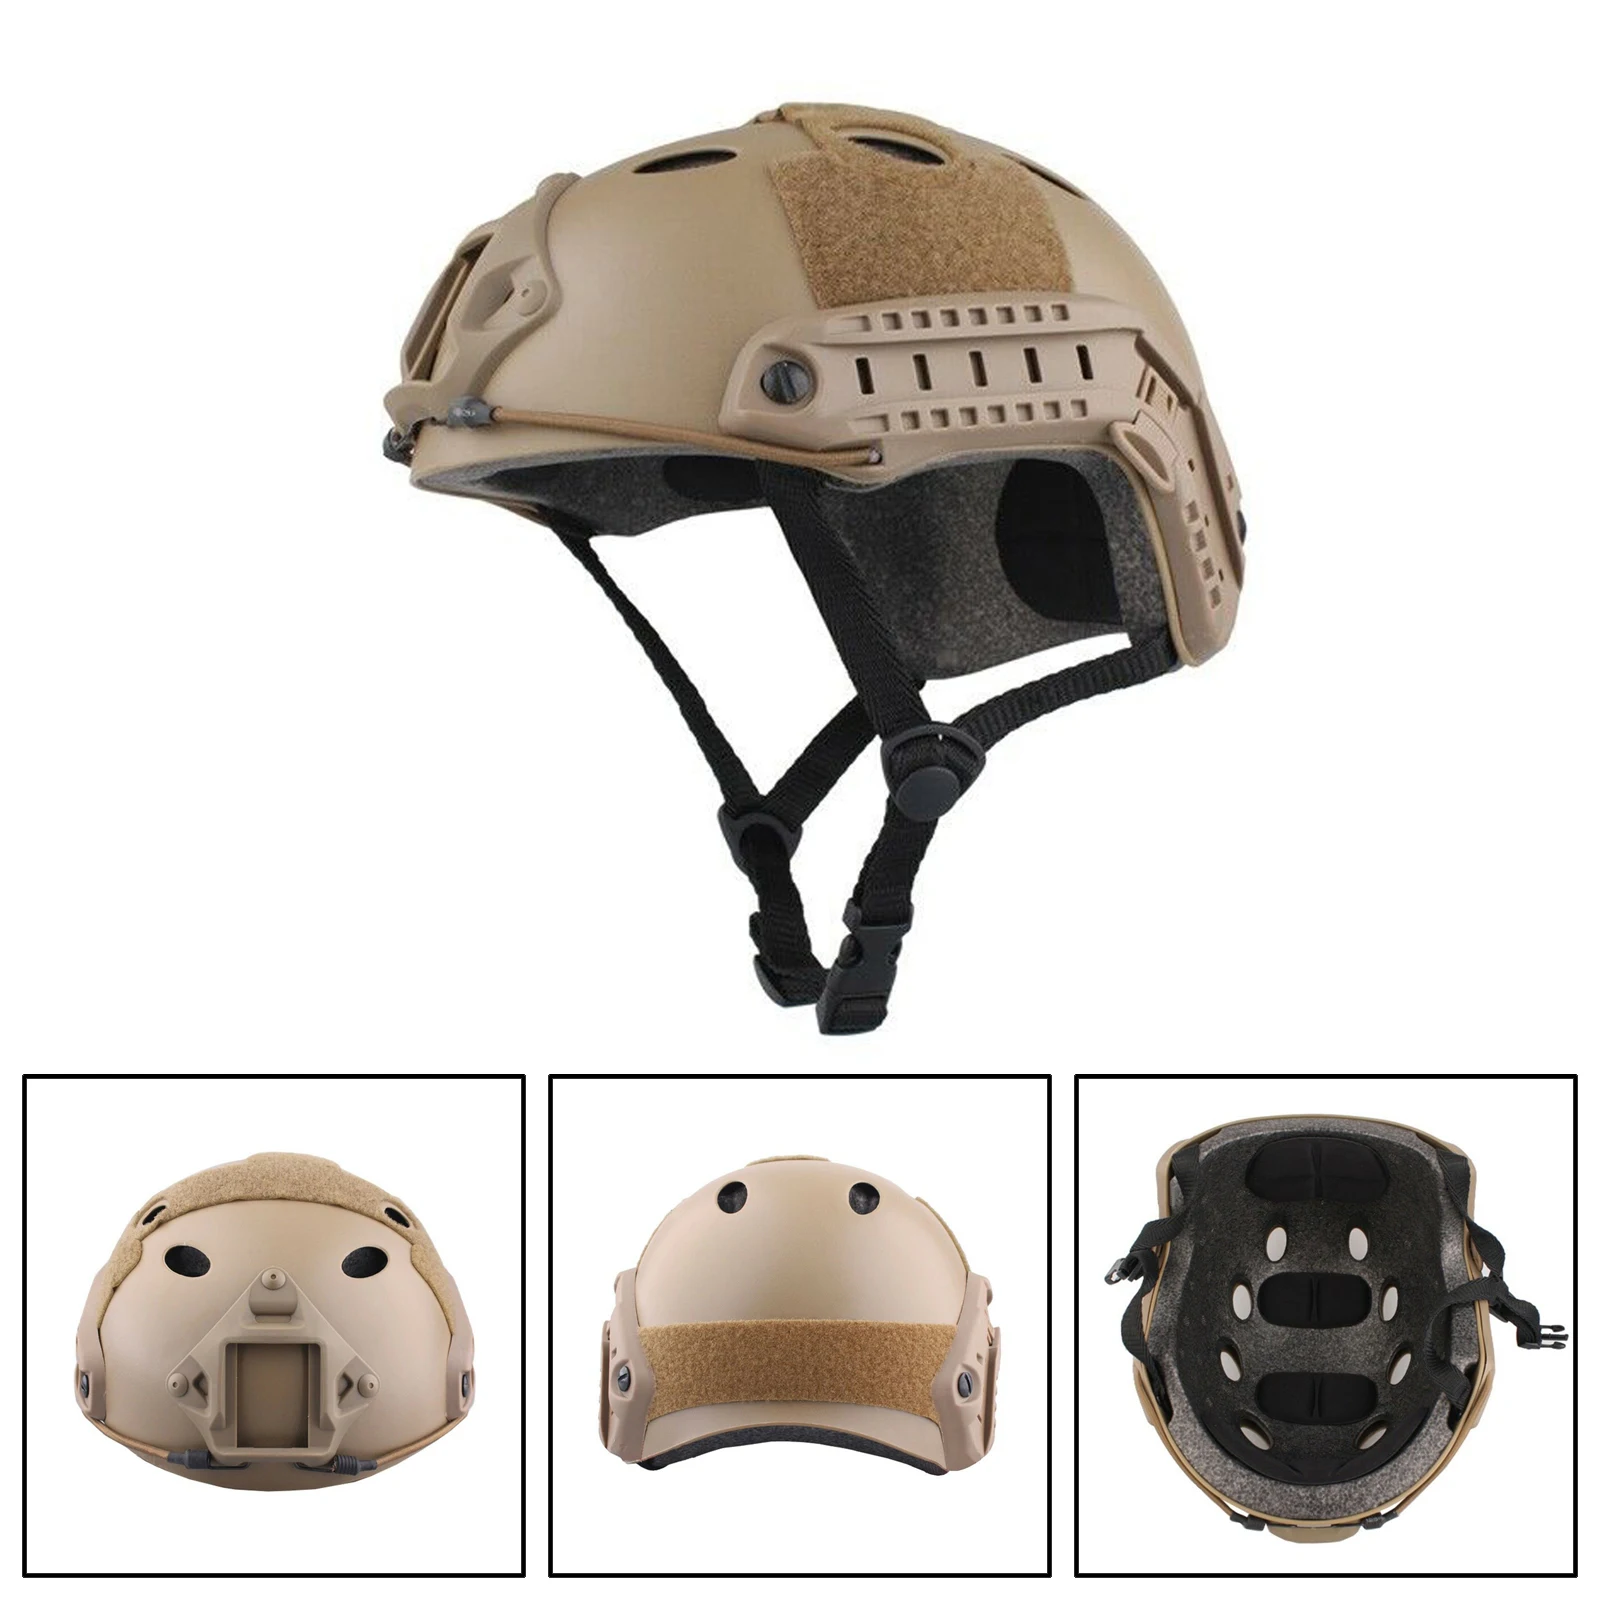 

Tactical Fast Helmet PJ Type Ballistic Protective Military Helmet Airsoft Outdoor Painball CS SWAT Riding Protect Equipment